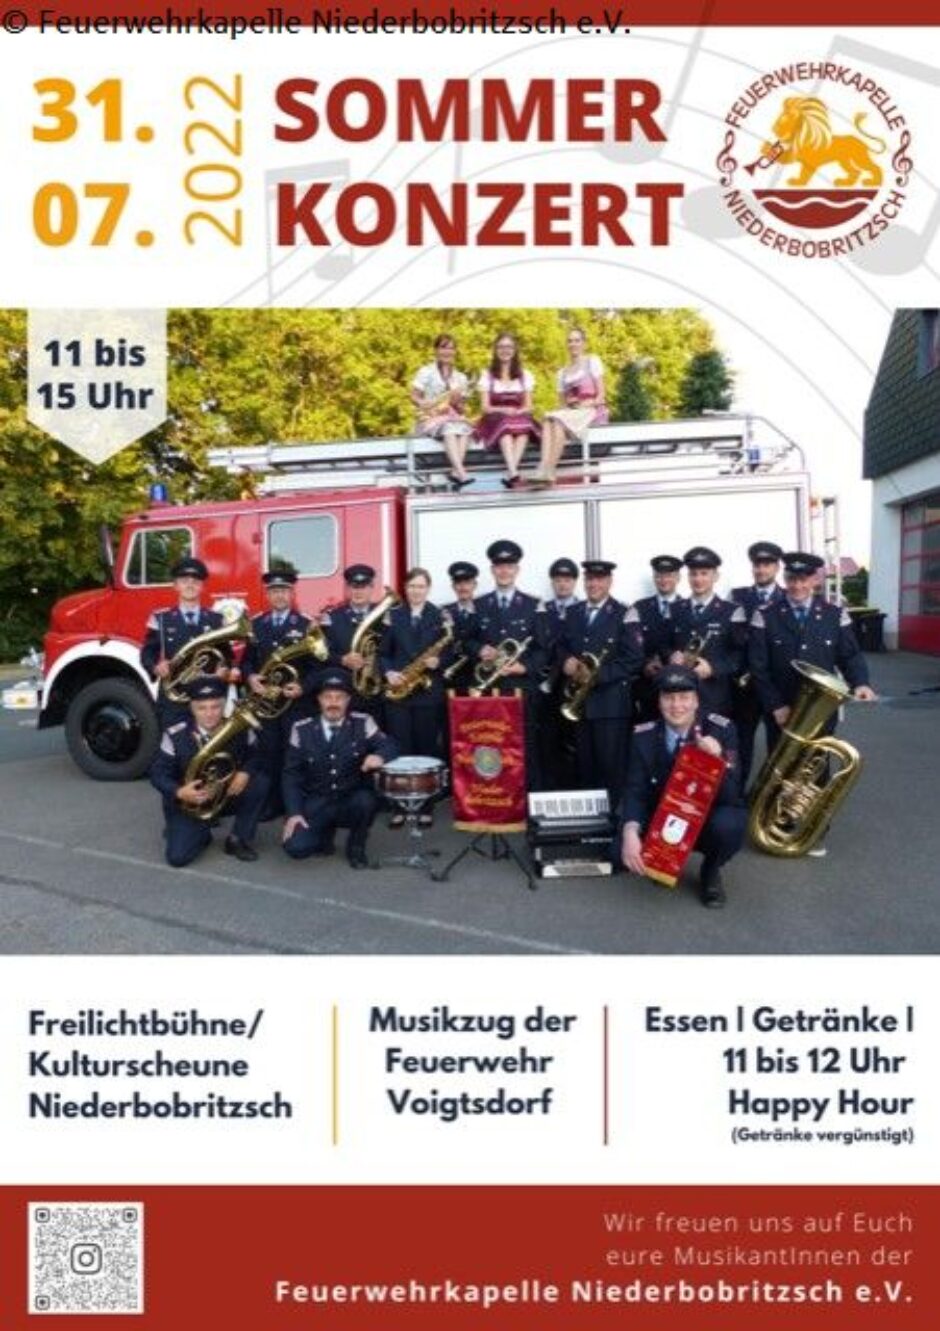 Feuerwehrkapelle Niederbobritzsch e.V.: Sommerkonzert am 31.7.2022